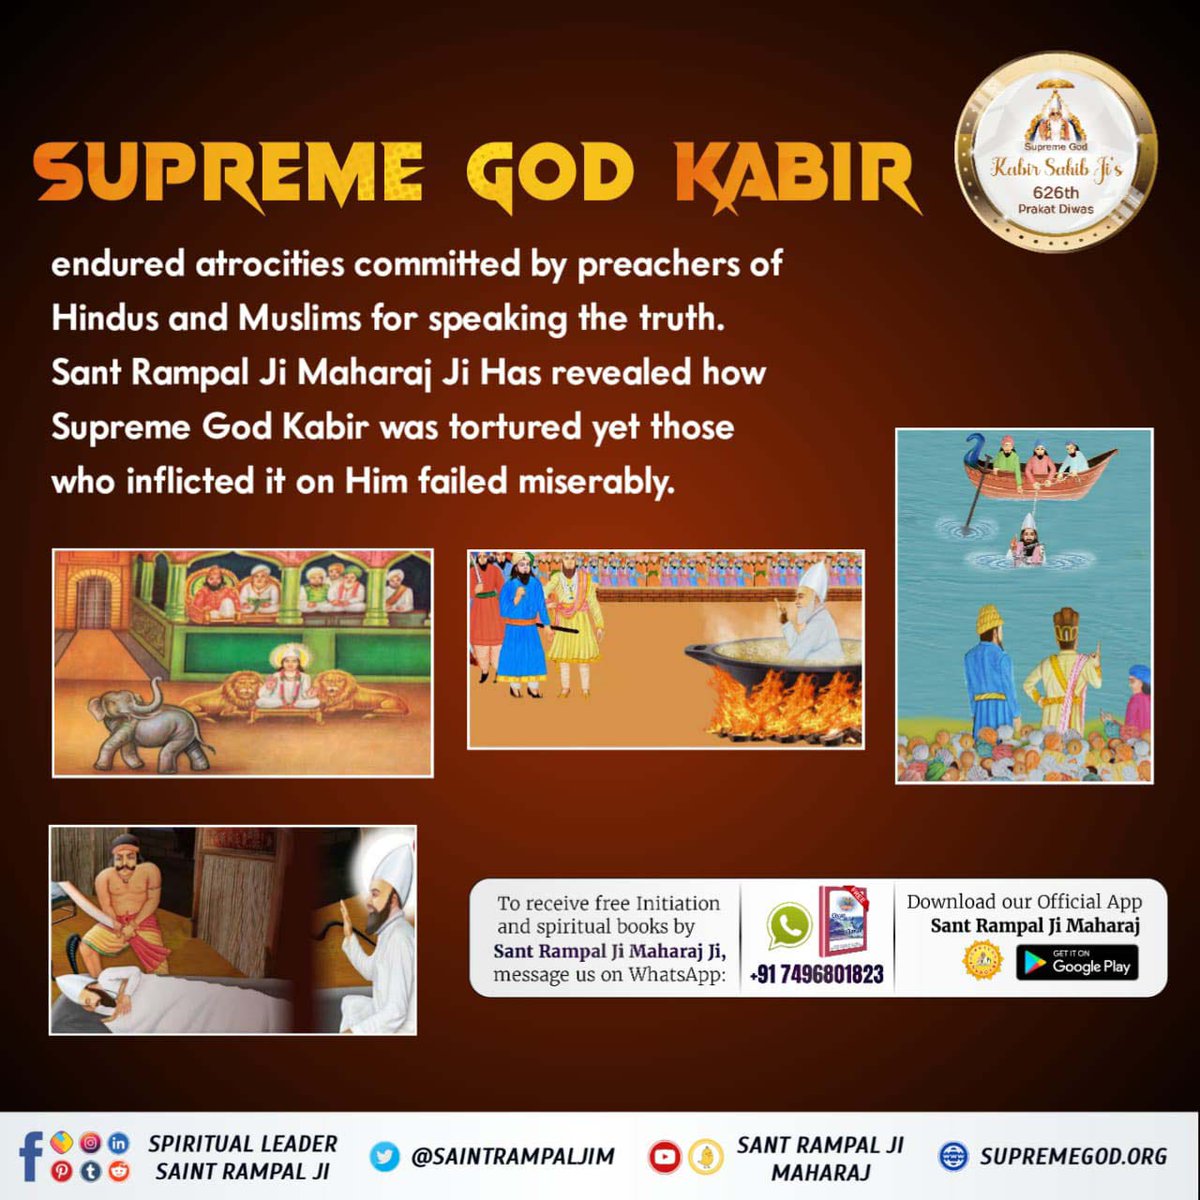 #कबीर_भगवान_के_चमत्कार
An attempt to kill Lord Kabir through a poisonous snake.
👇🏼Listen to the
AudioBook 'Gyan - Ganga' on Sant Rampal Ji Maharaj YouTube Channel.

God Kabir Prakat Diwas